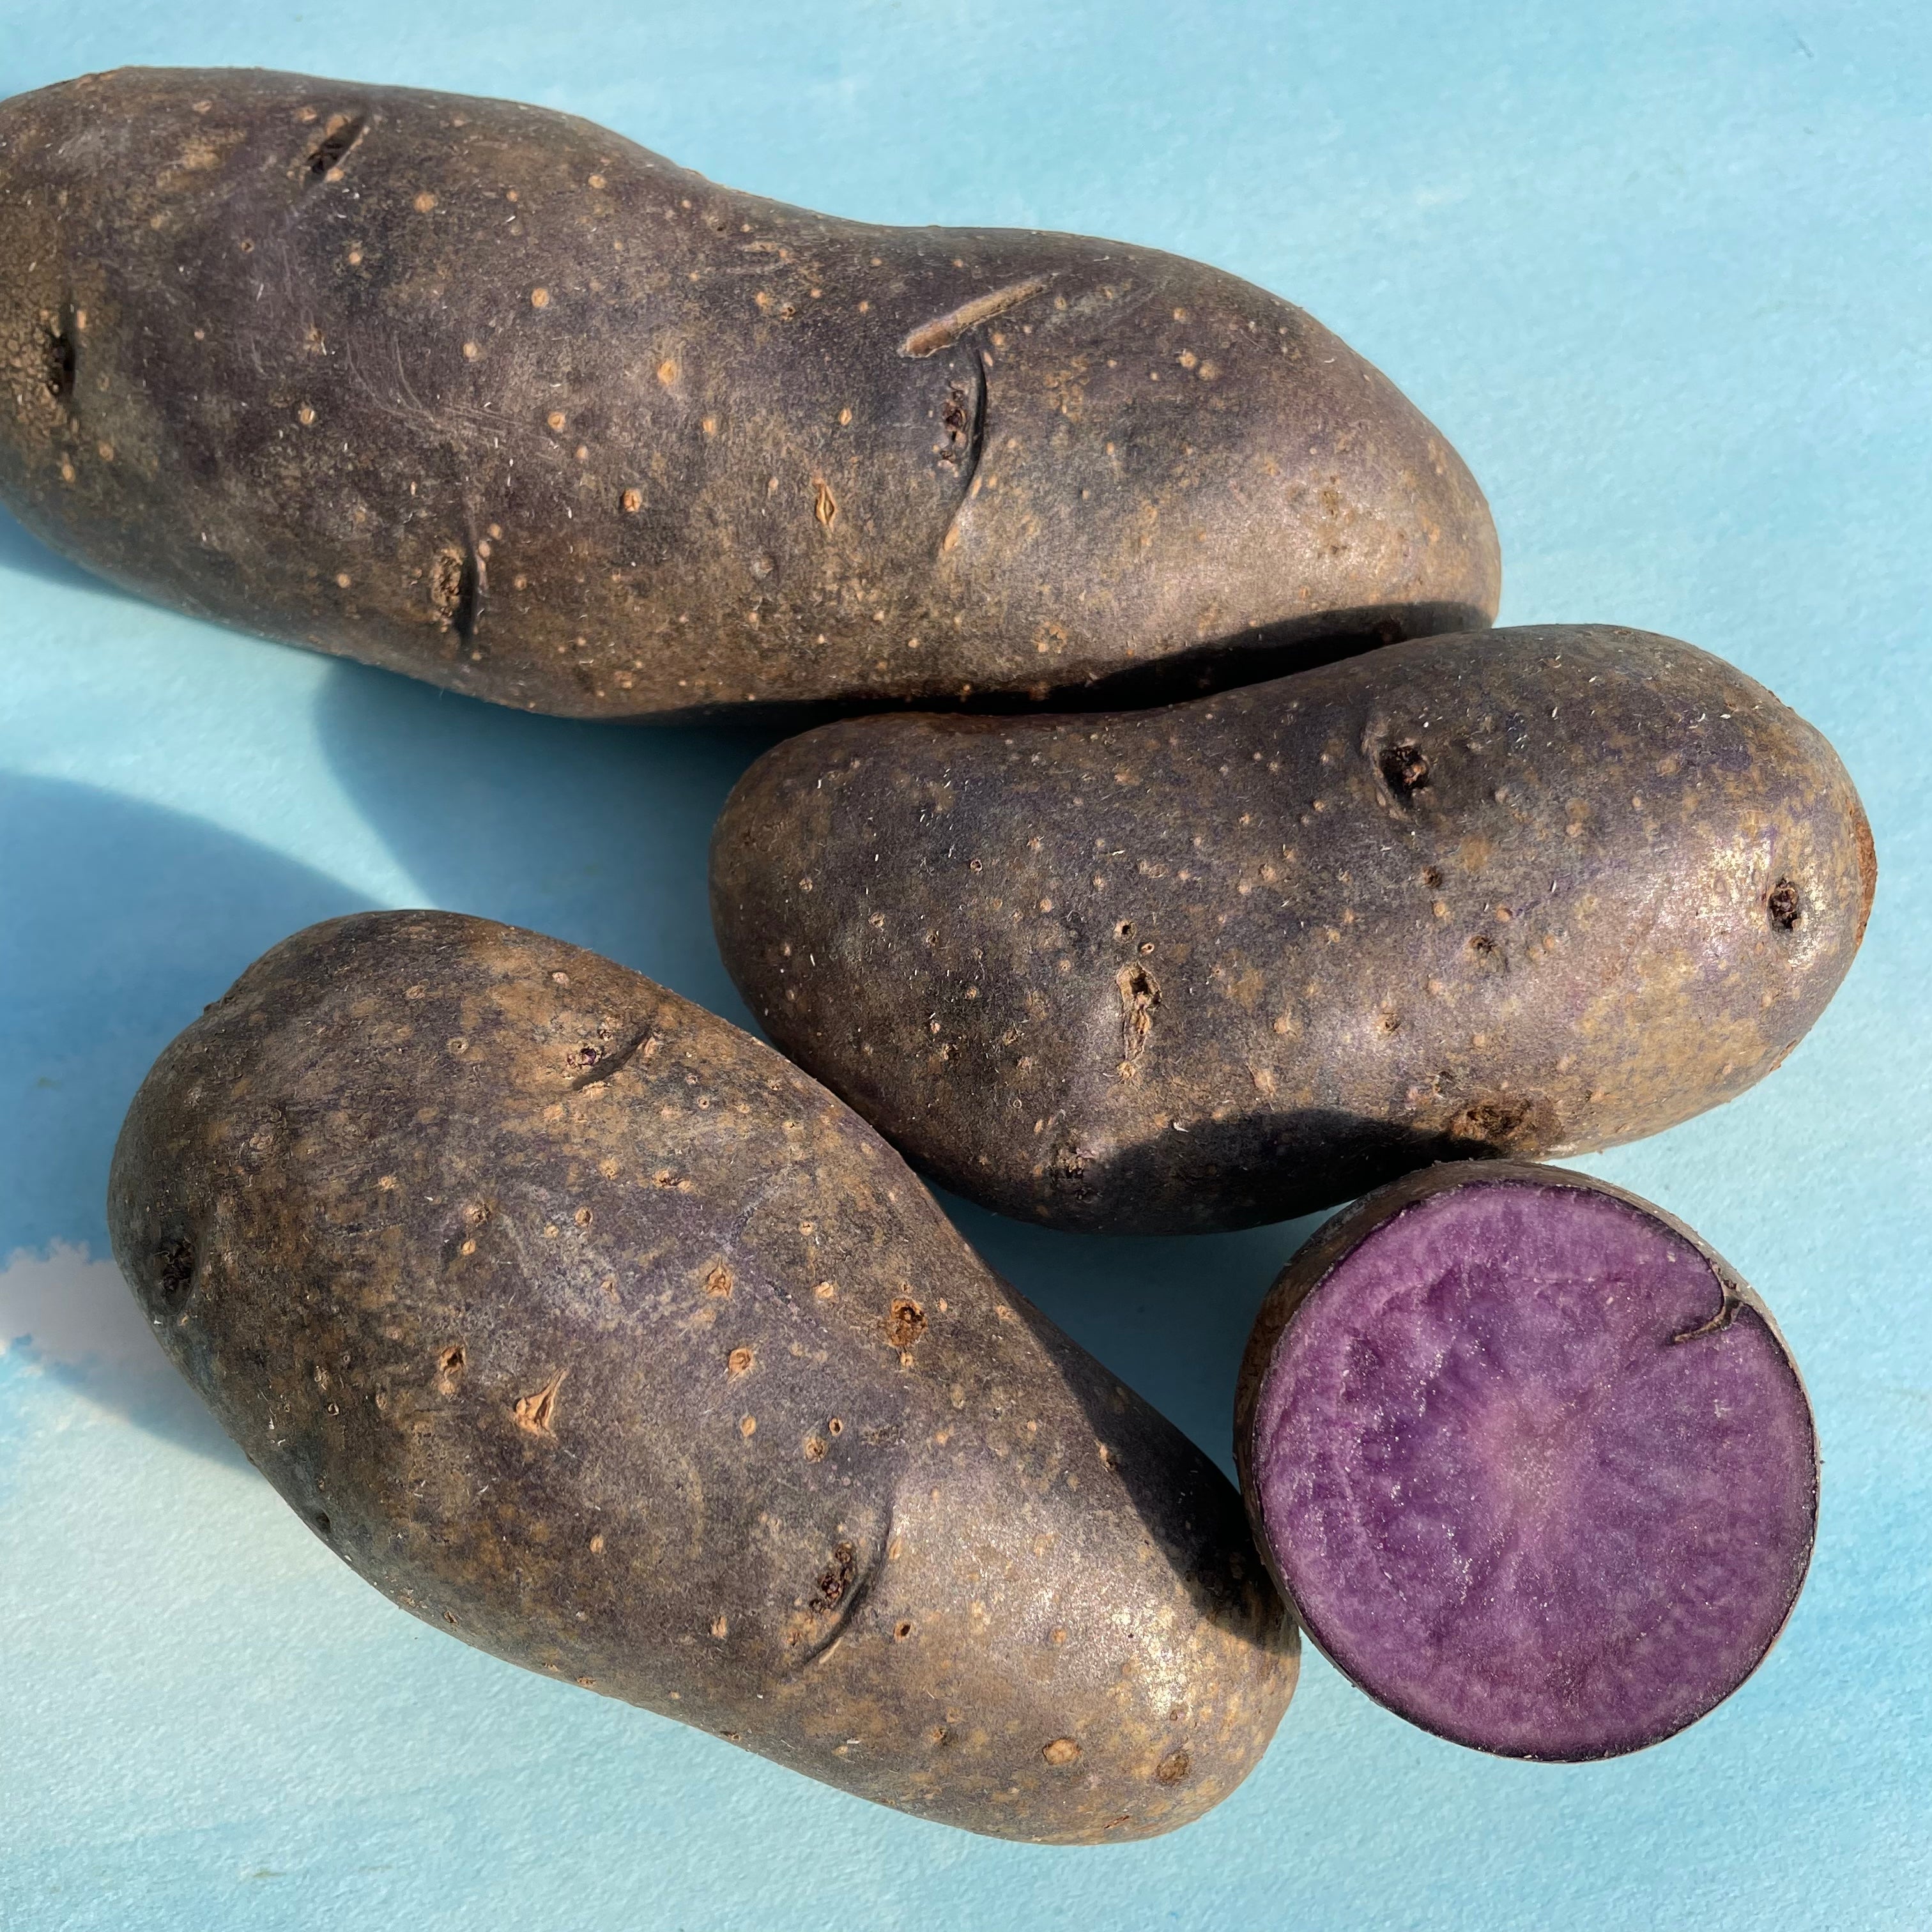 Organic Sweet Potatoe, overseas season update